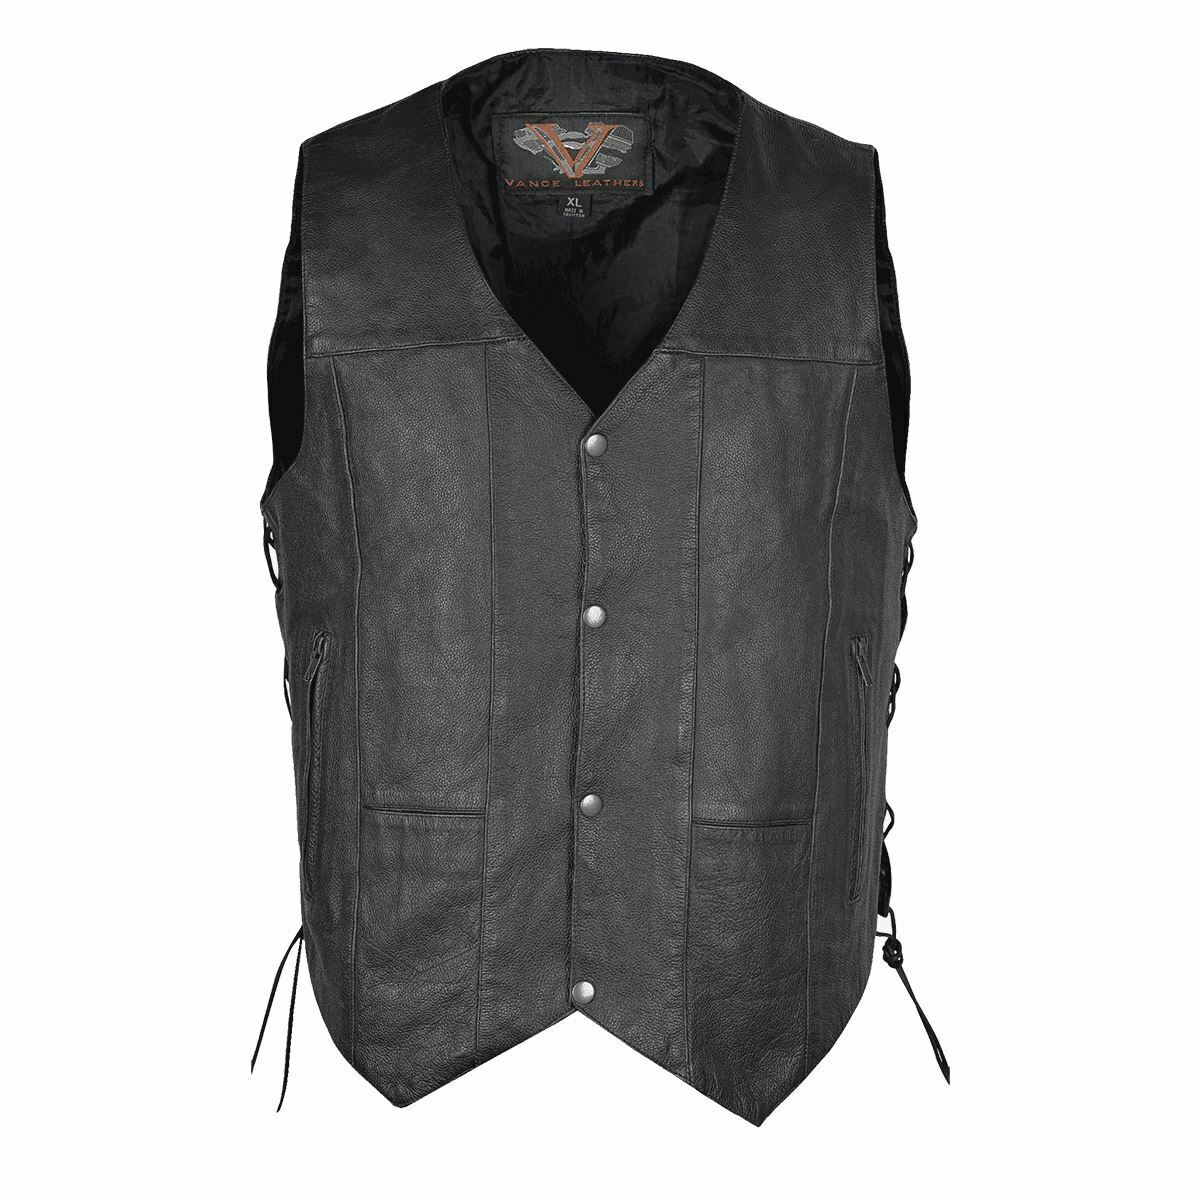 Vance Leather VL915S V neck Leather Motorcycle Vest